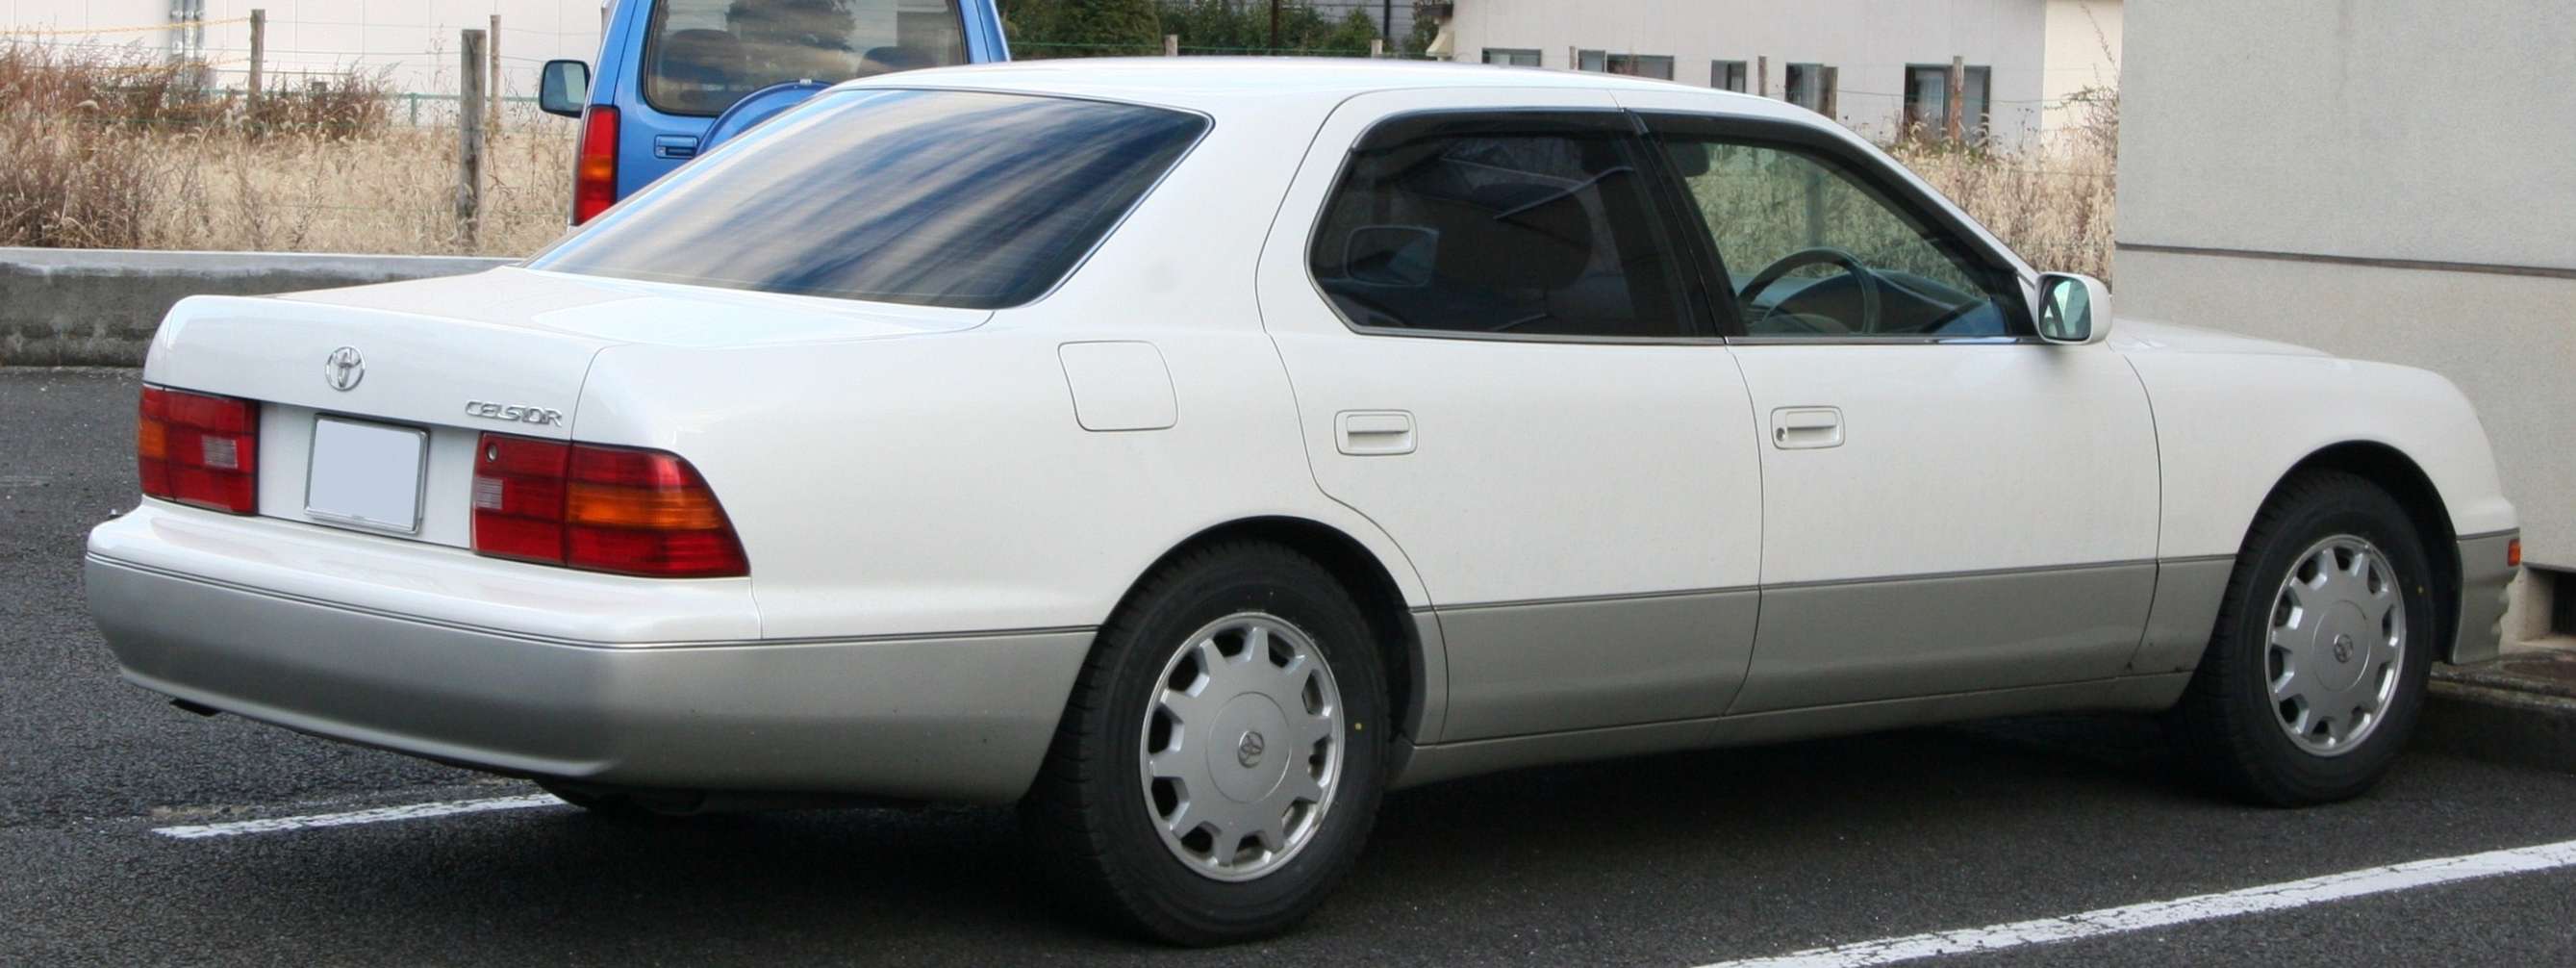 Toyota Celsior #8150596